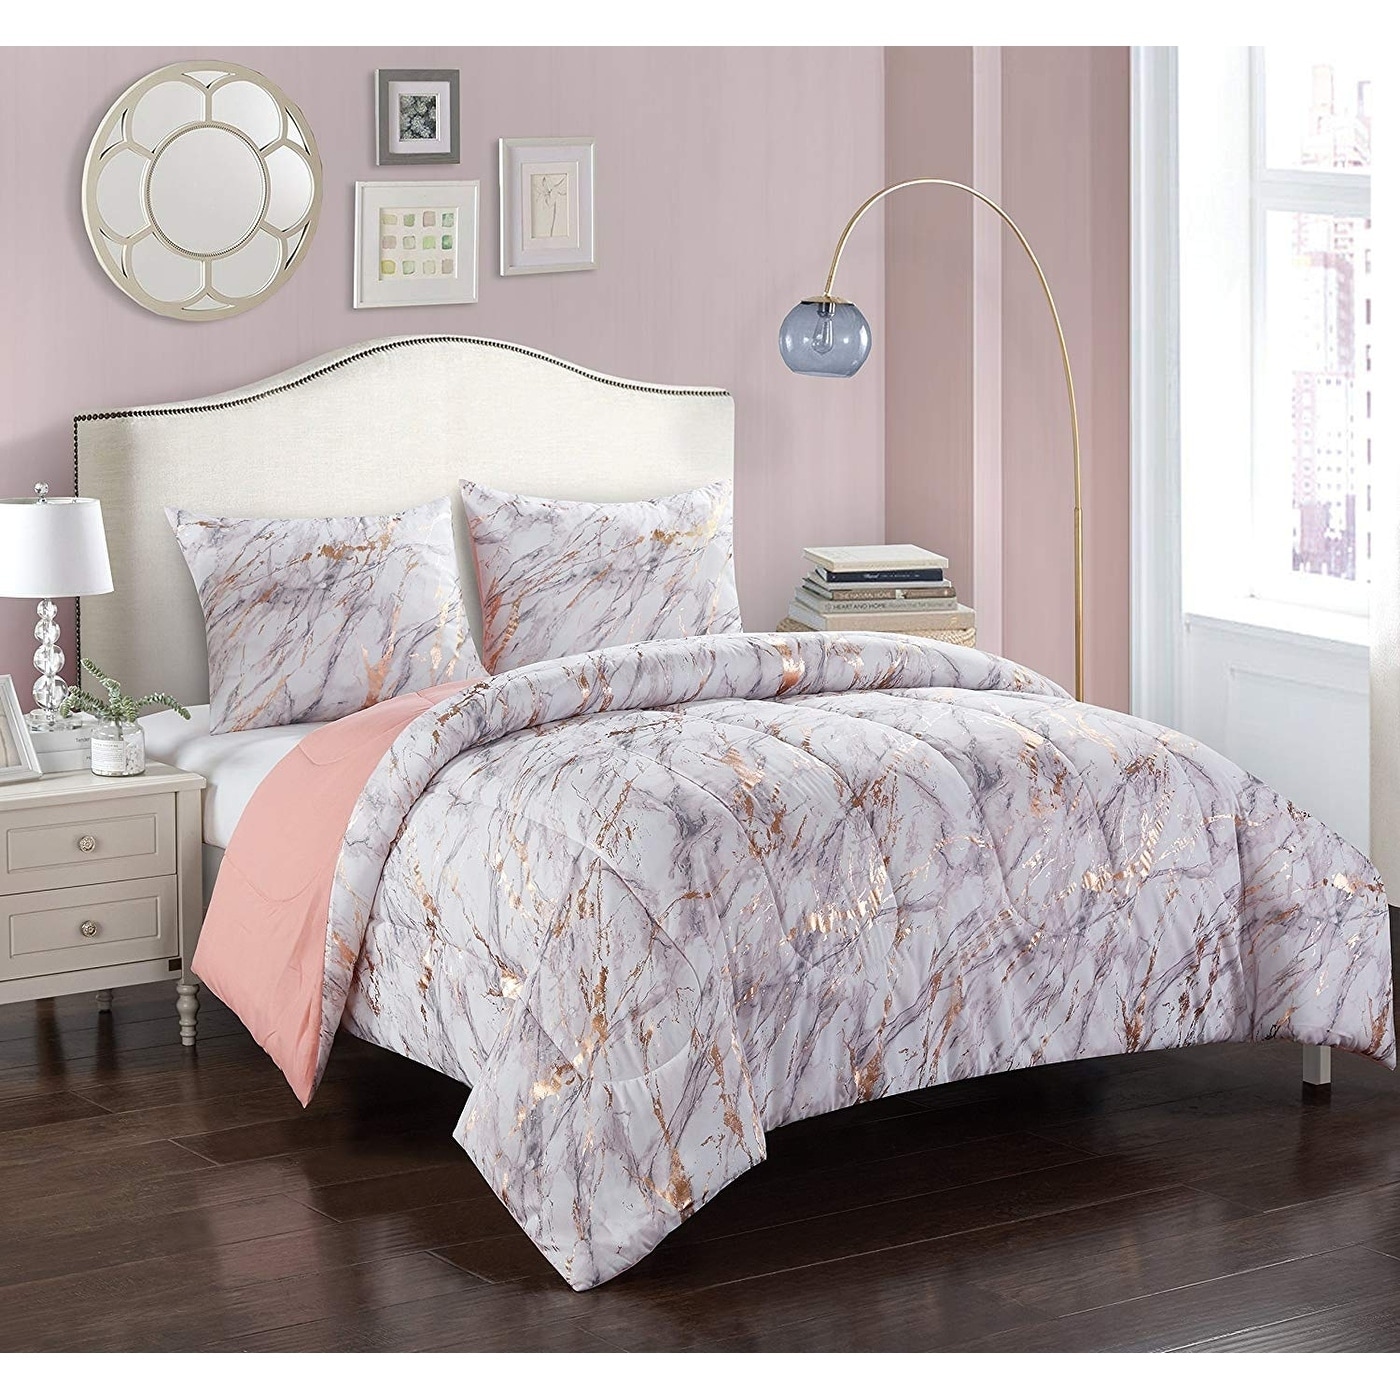 rose gold comforter - Expert Interior Design Ideas for Your Home Extra